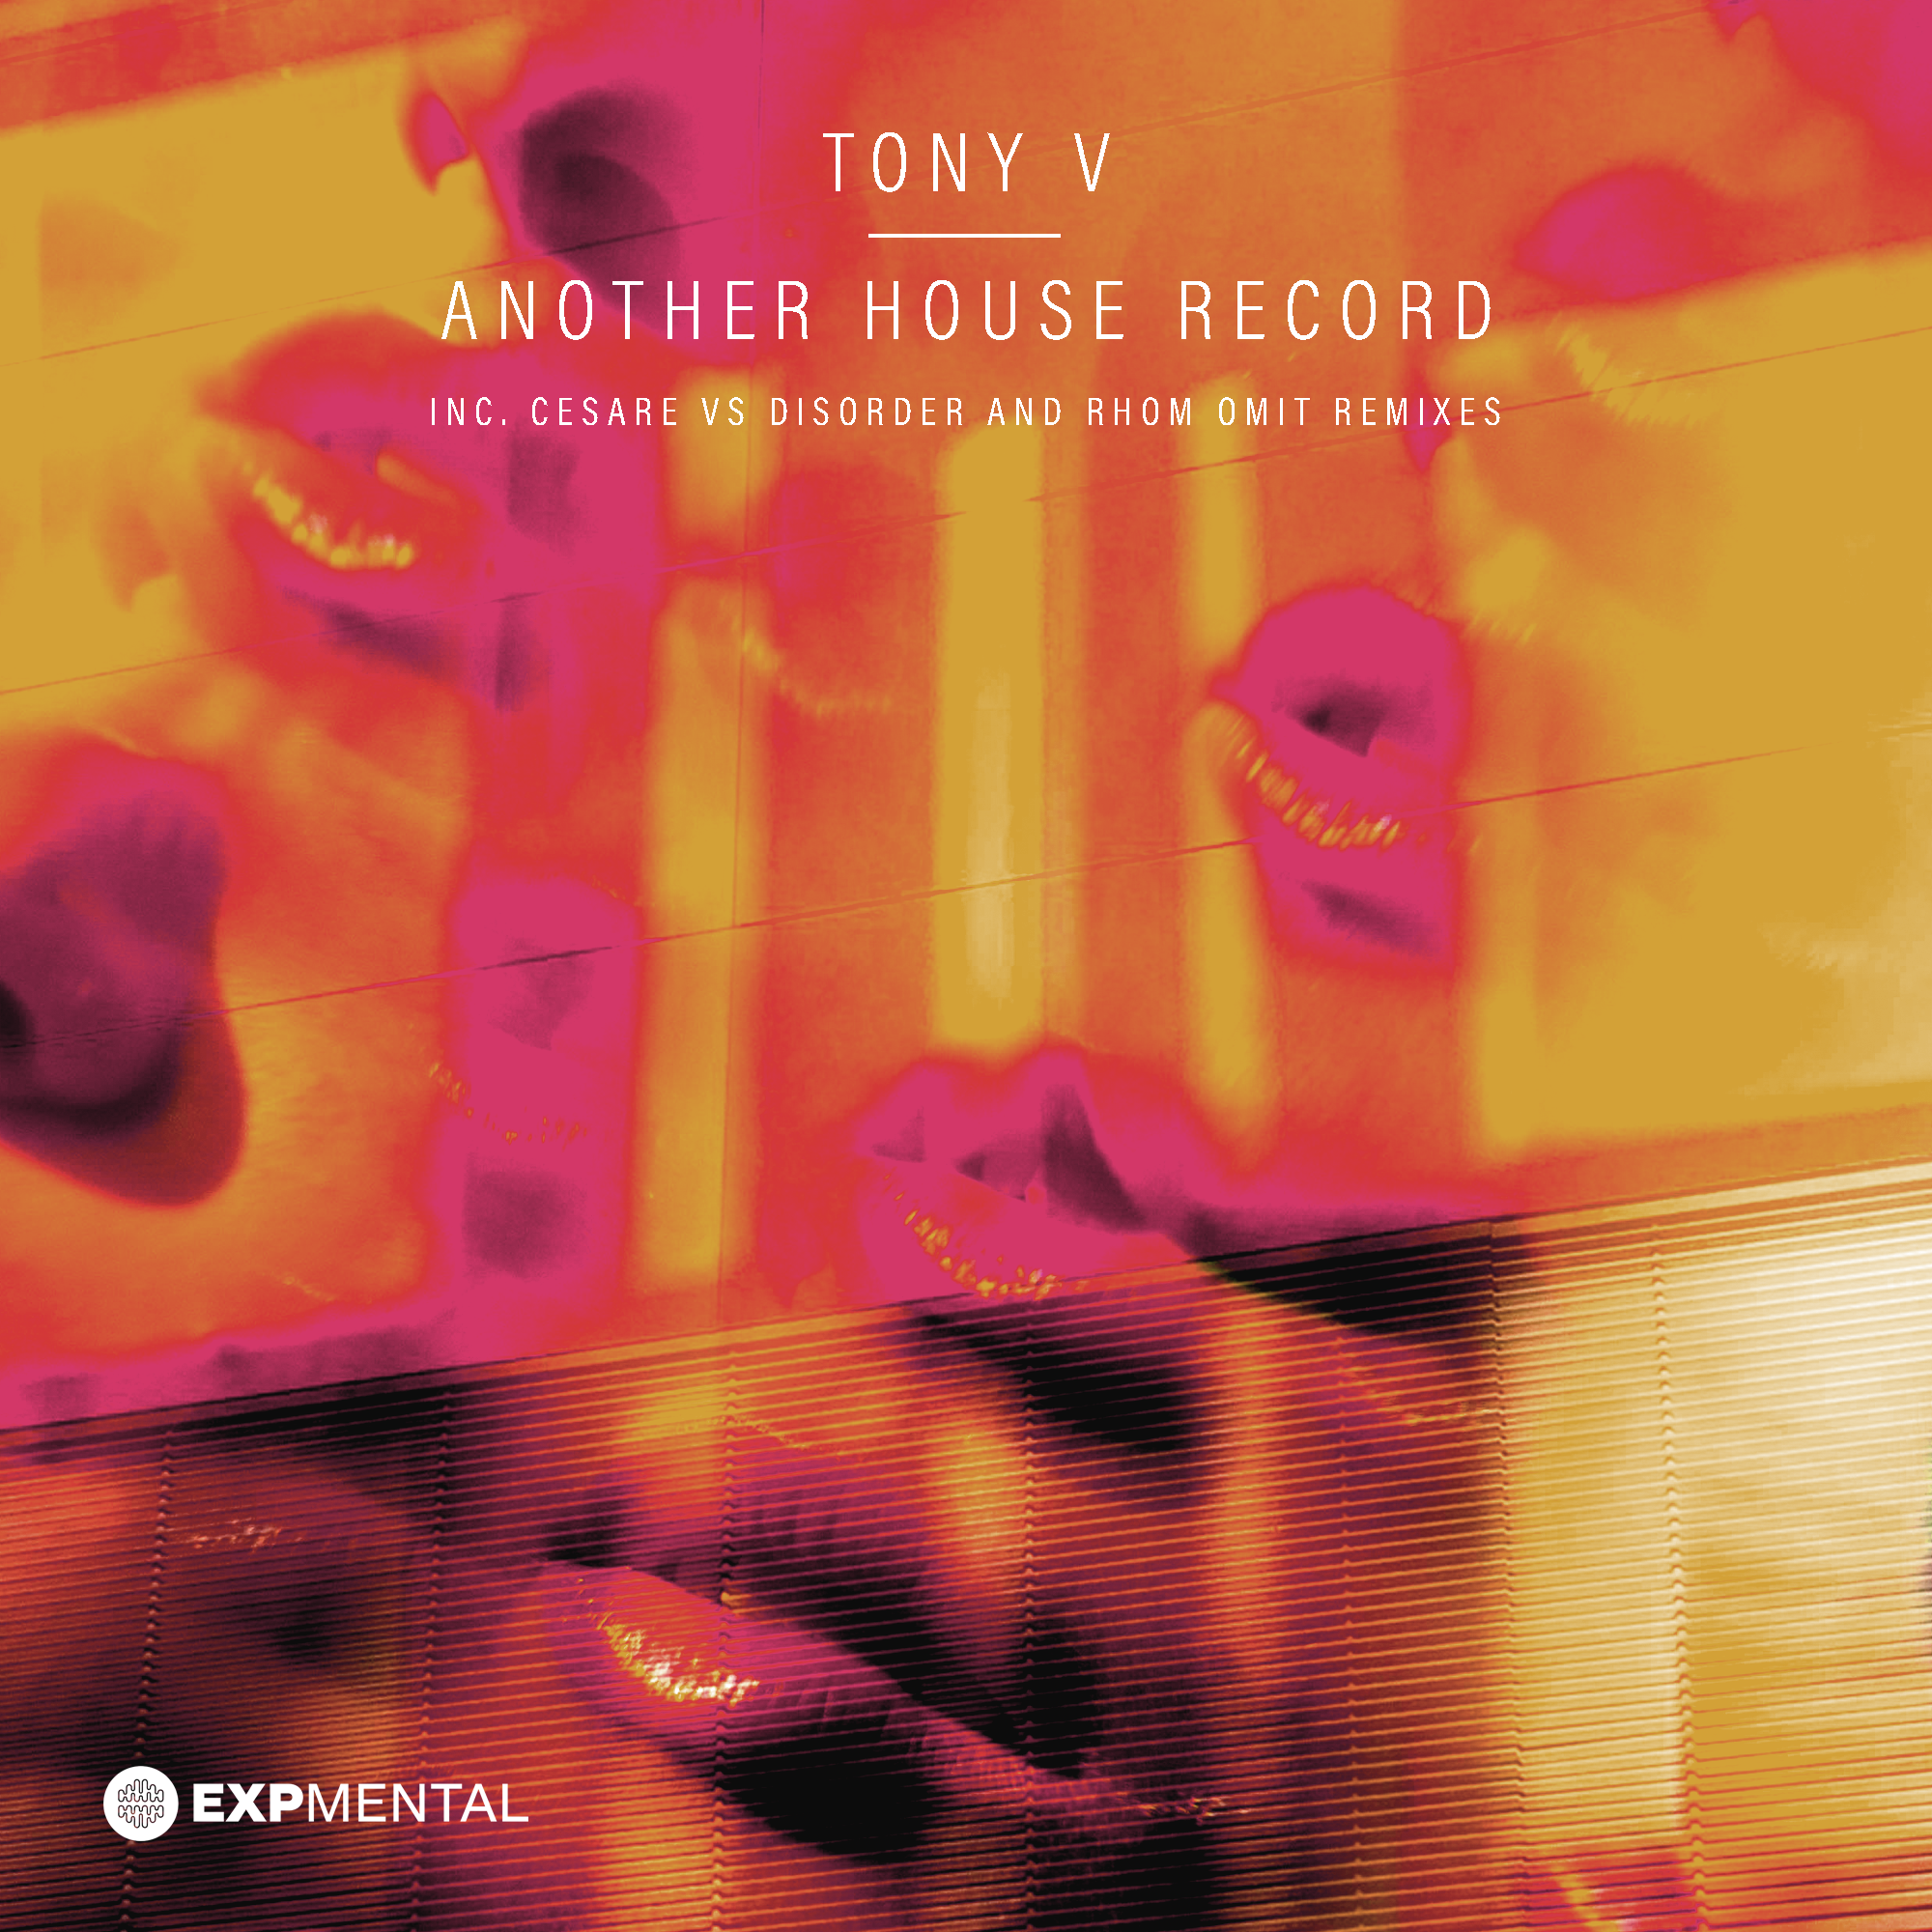 Tony V's new EP, Another House Record